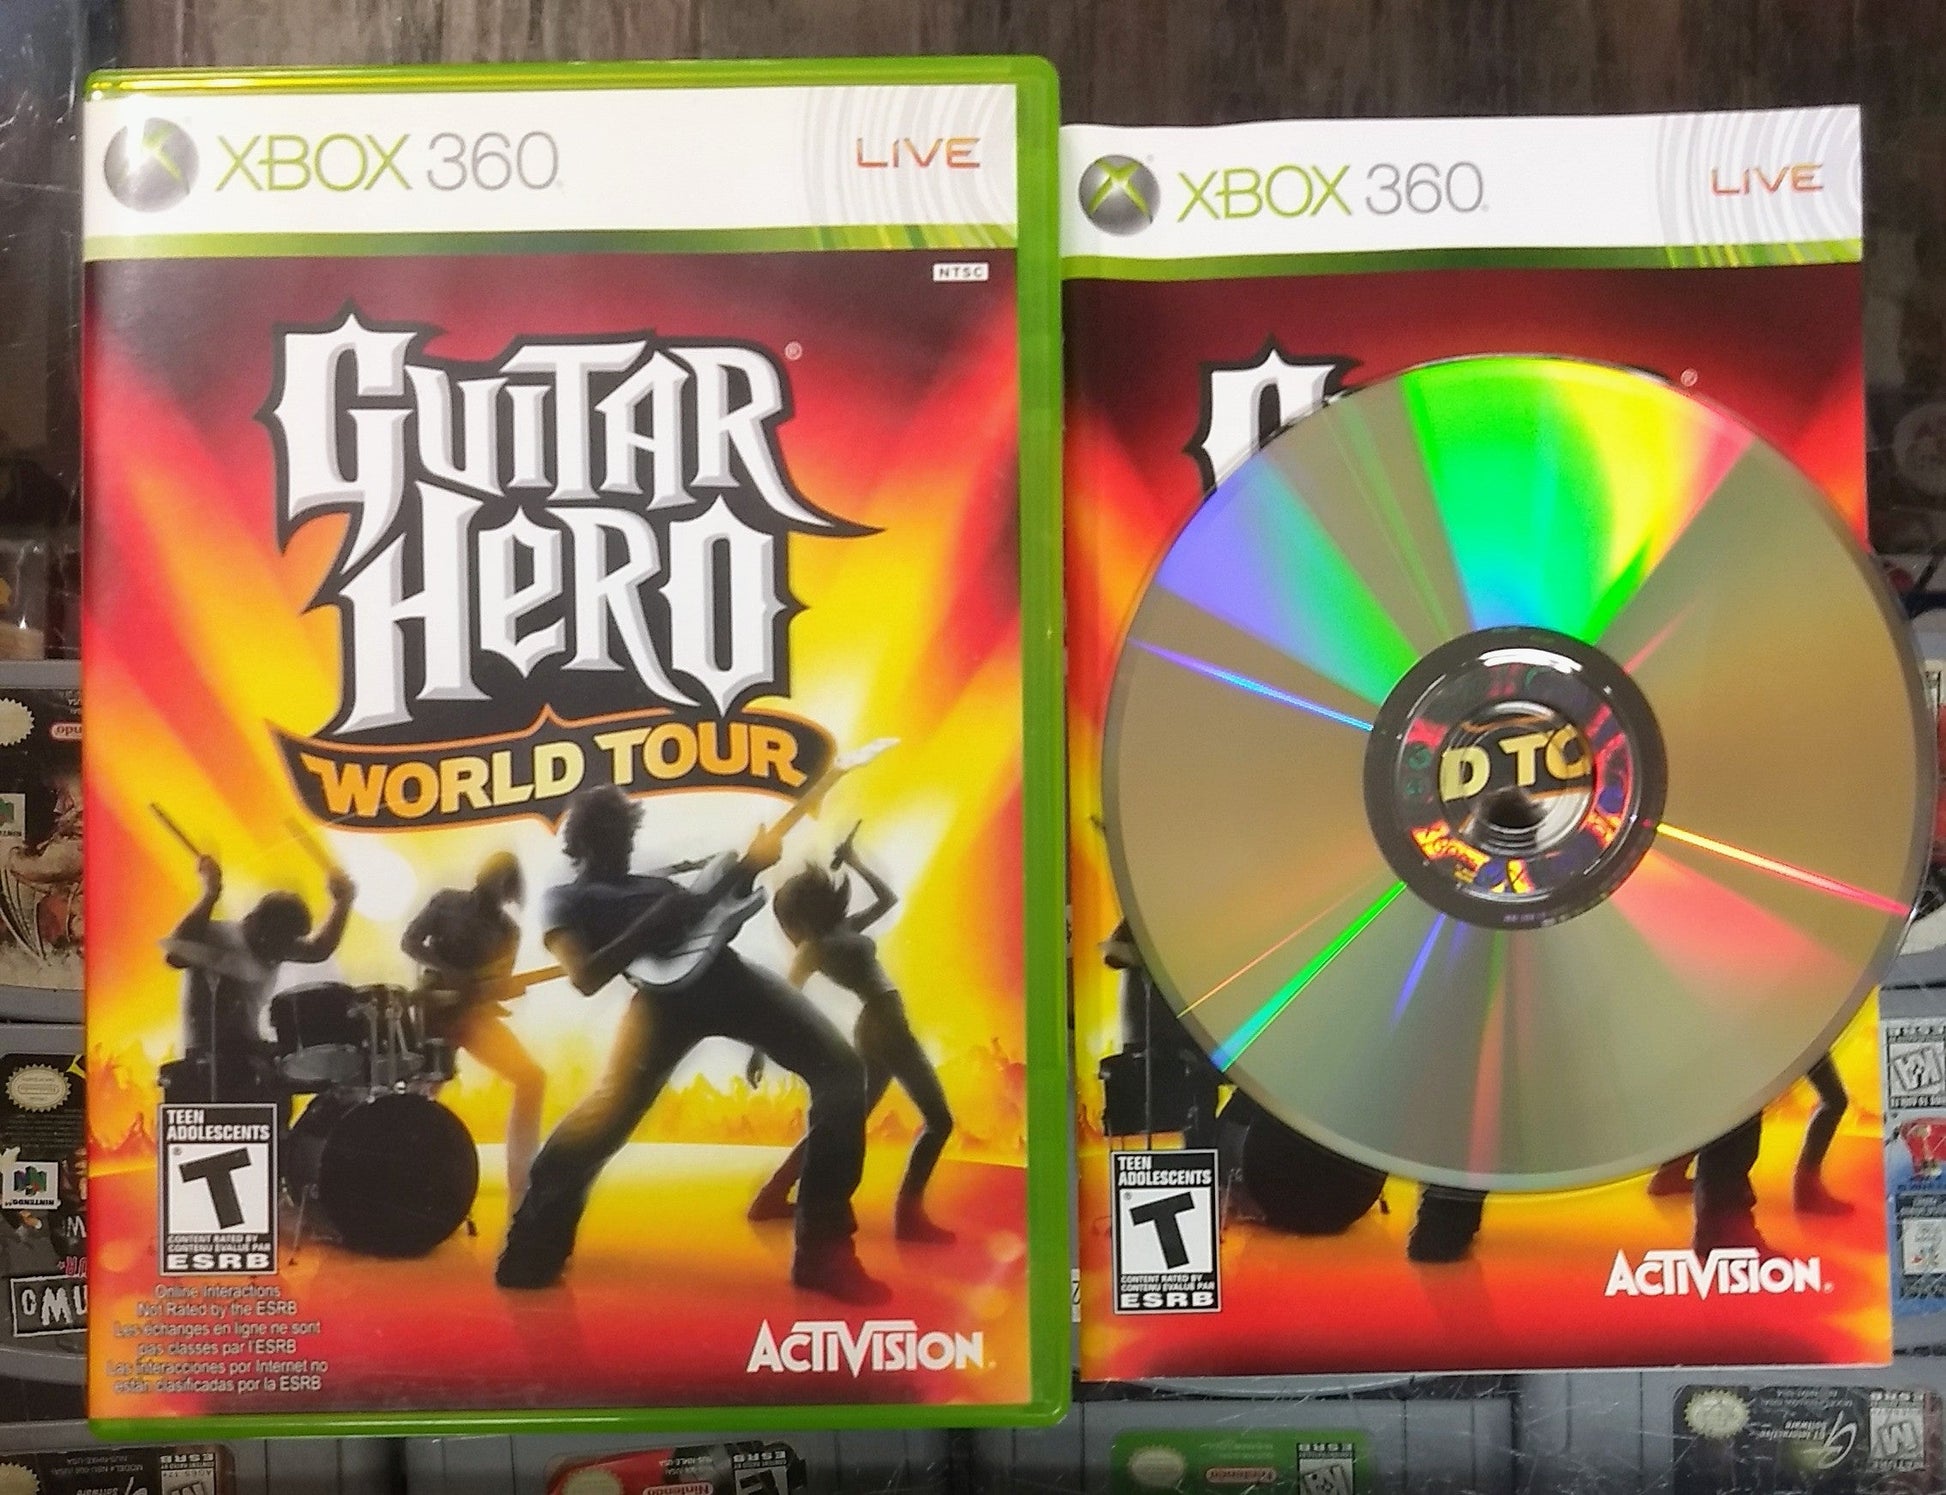 GUITAR HERO WORLD TOUR XBOX 360 X360 - jeux video game-x